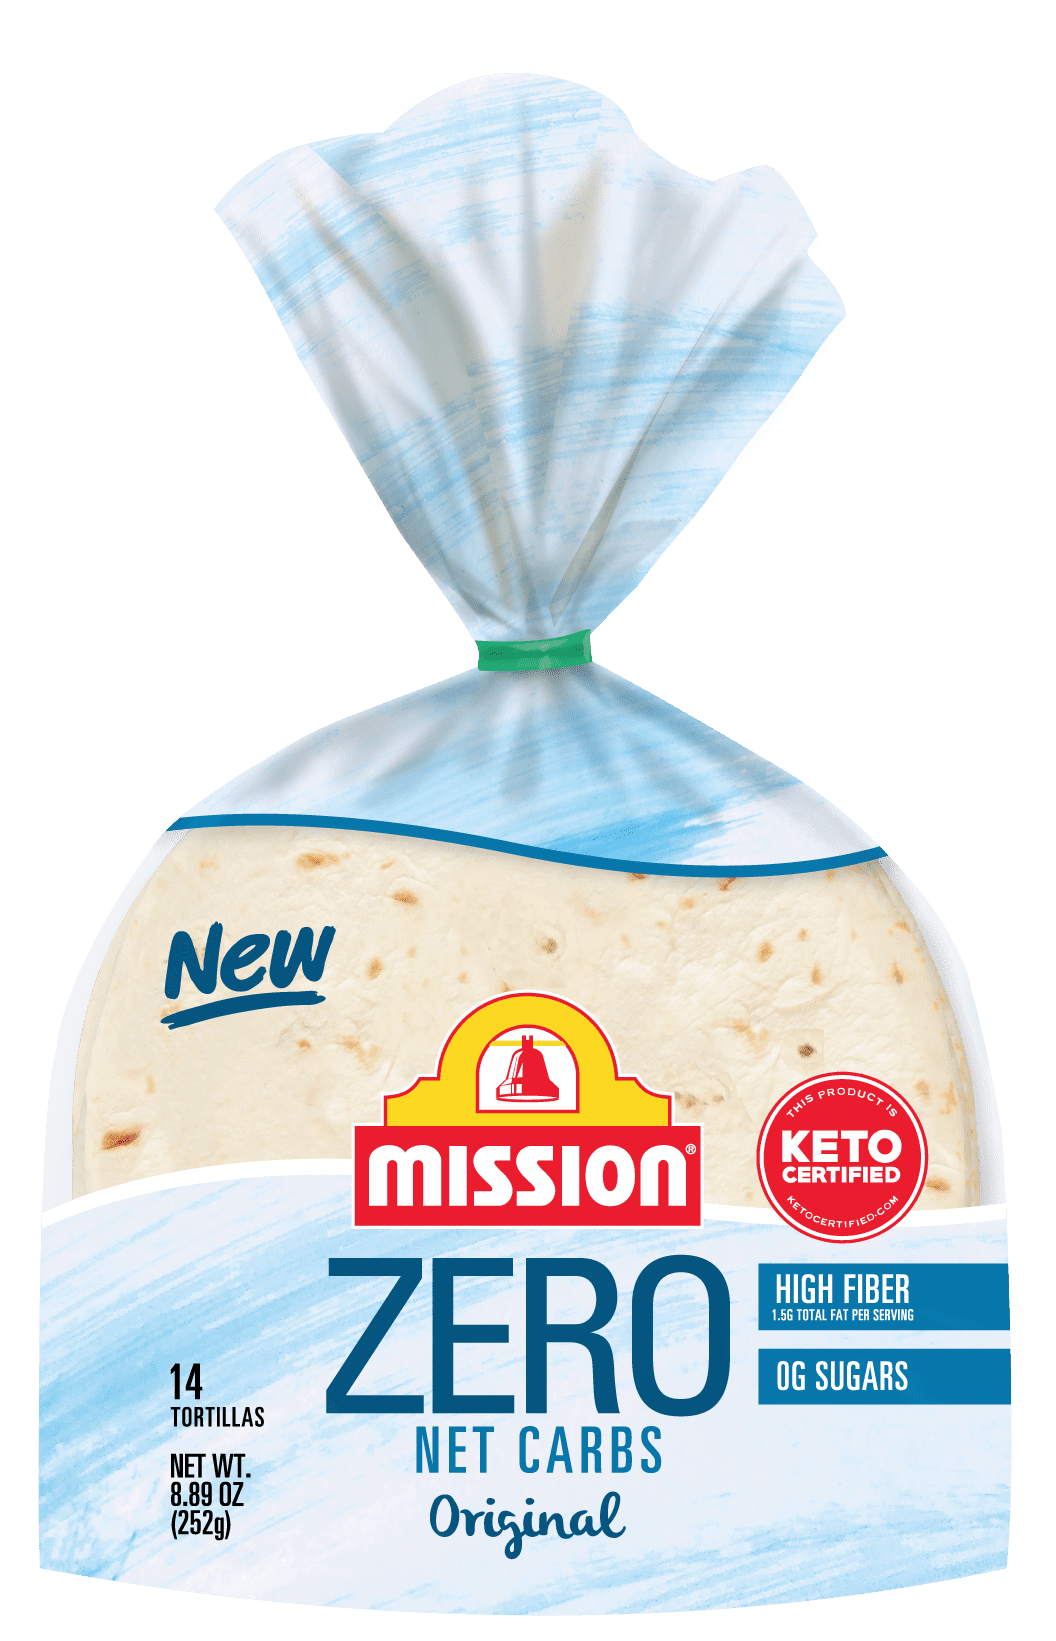 Mission Zero Net Carbs Original, 14 Count